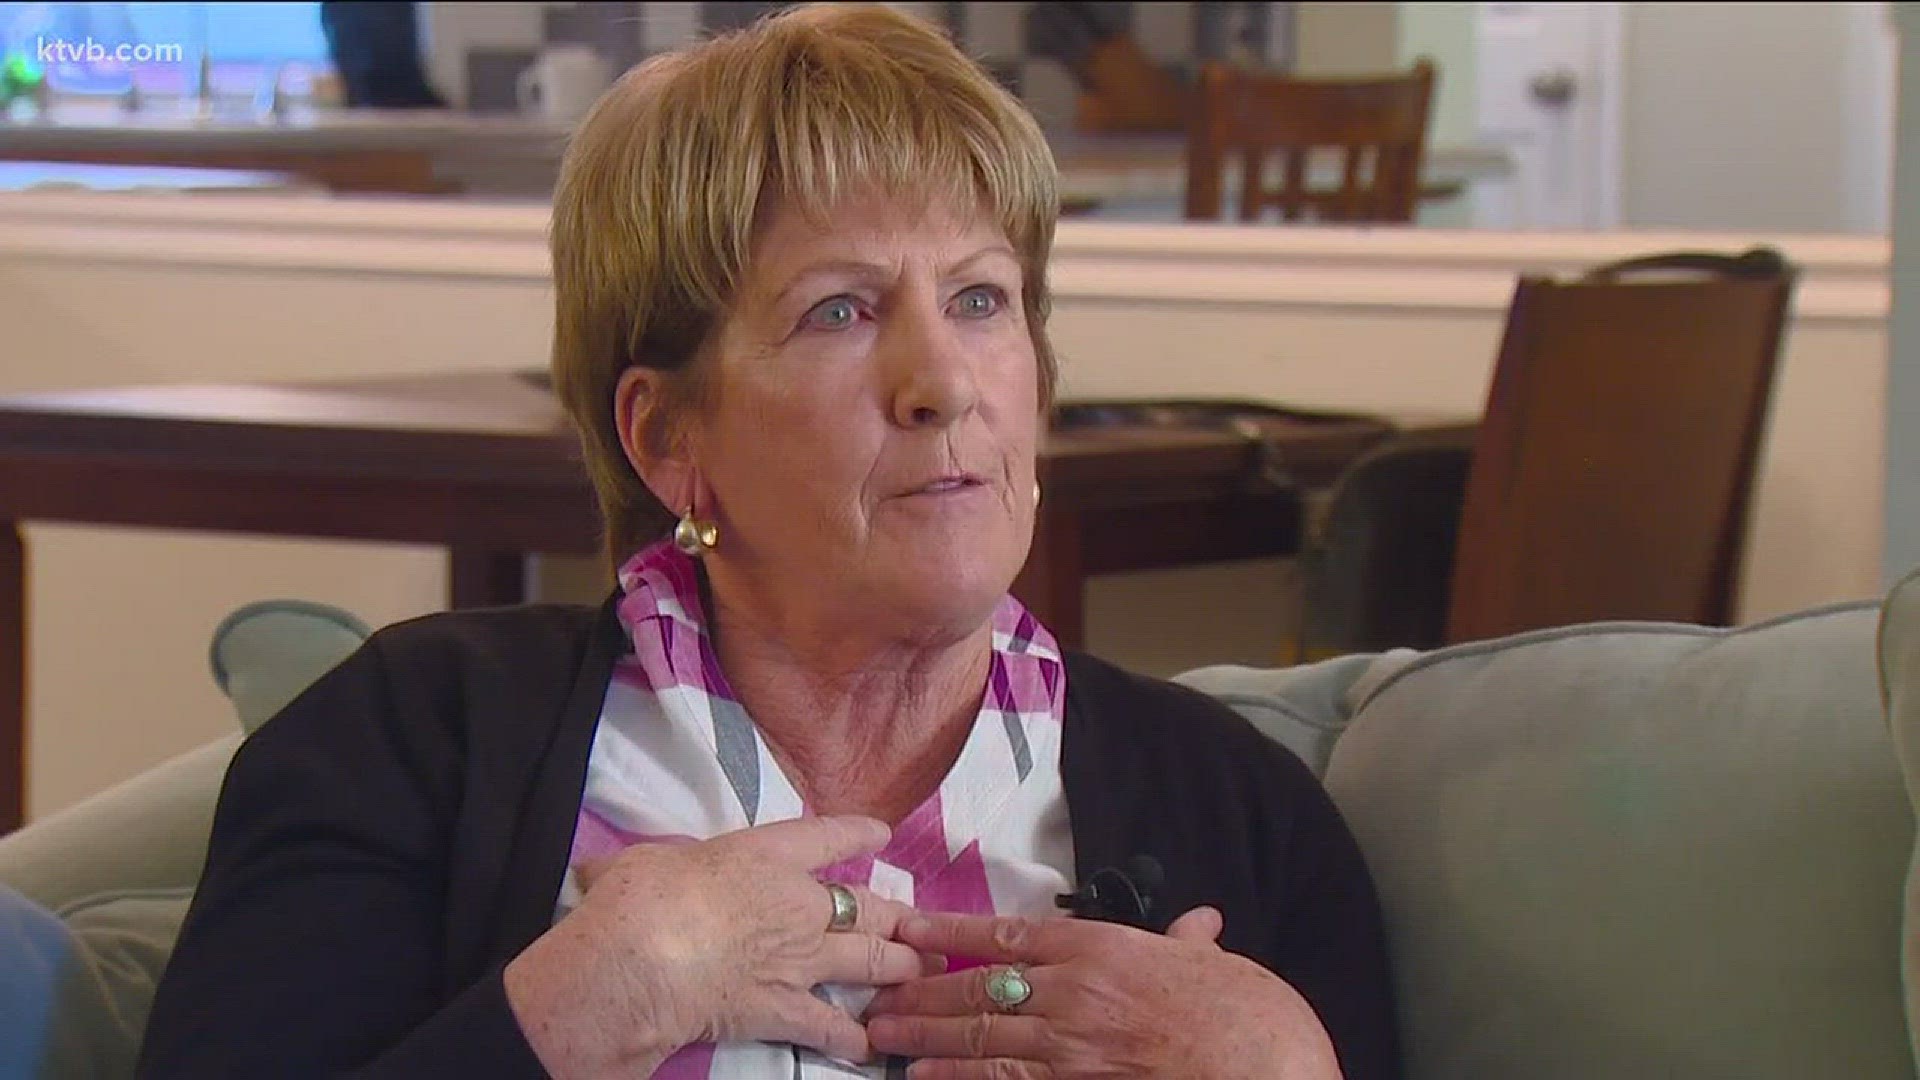 Kathy Cladis said cornea transplants changed her life.